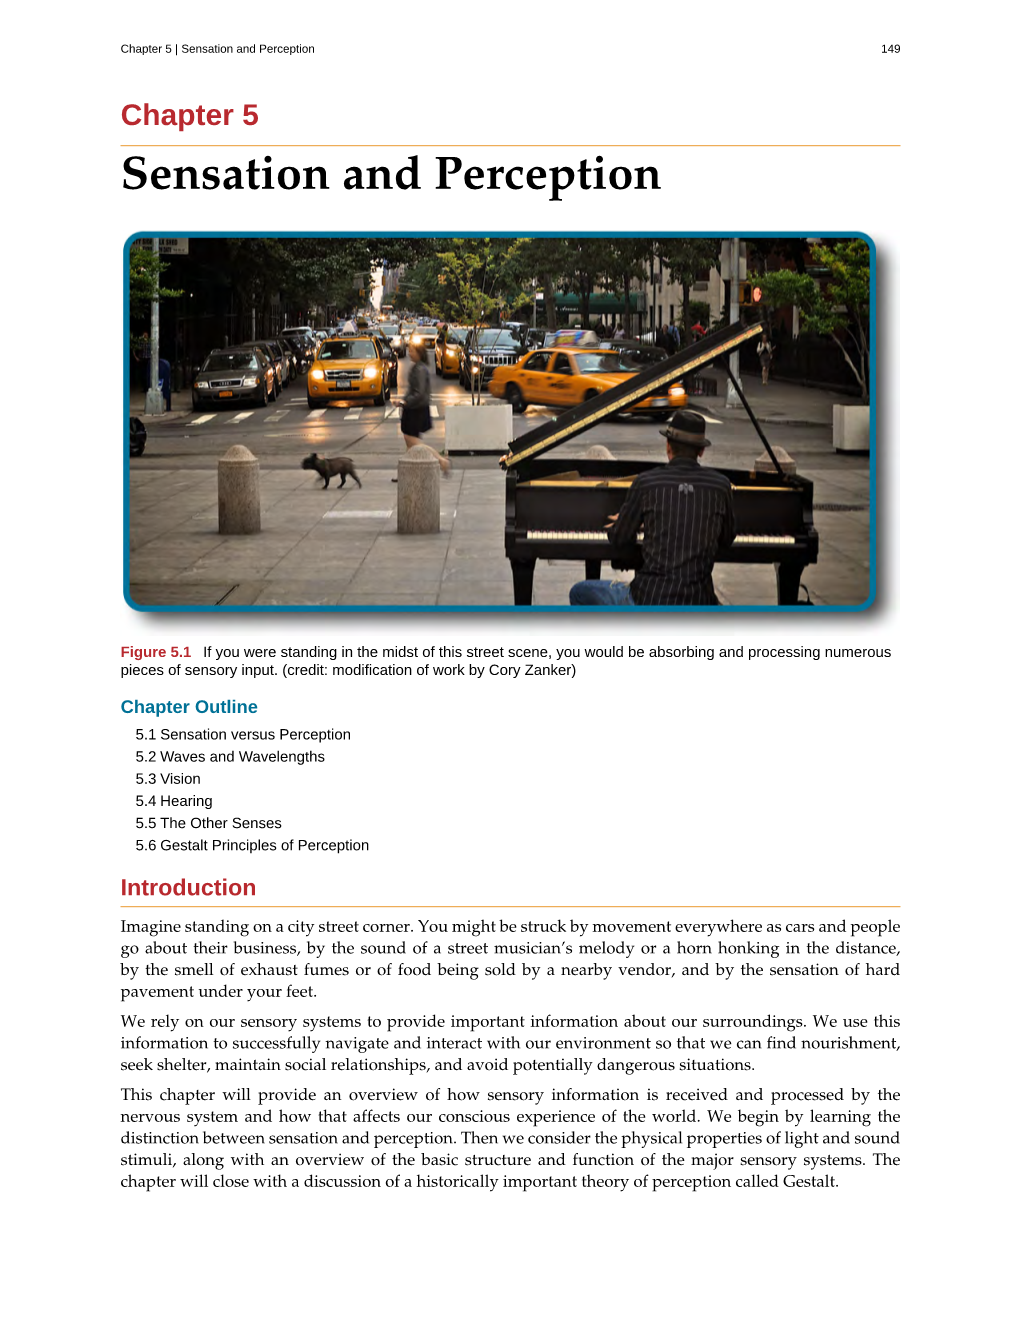 Sensation and Perception 149